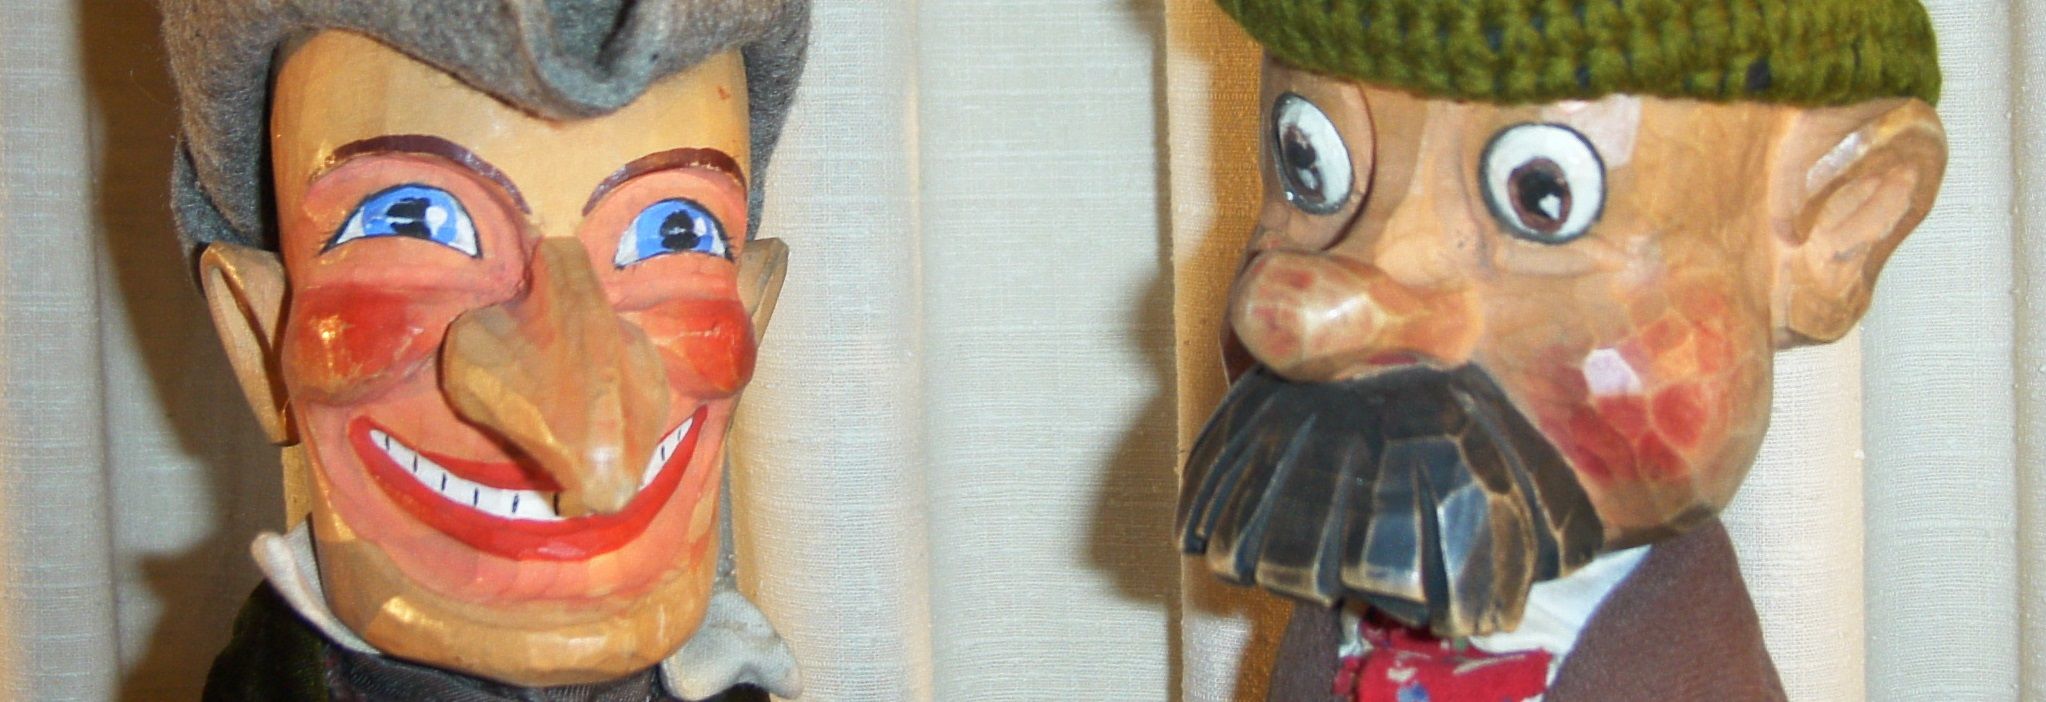 Puppen im Poppenspäler Museum in Husum